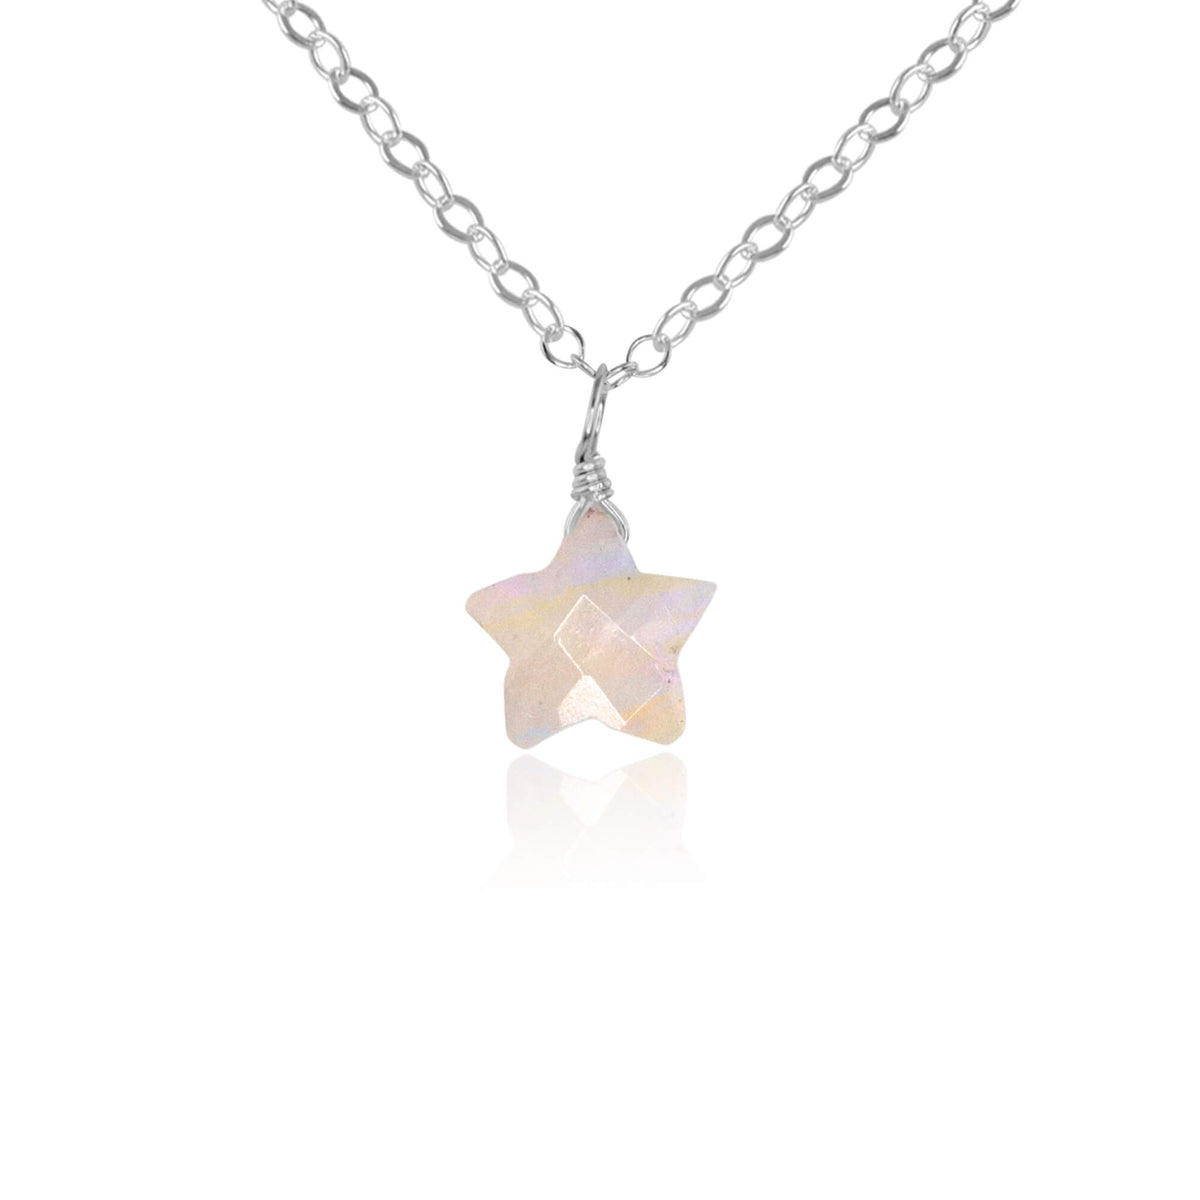 Crystal Star Pendant Necklace - Rainbow Moonstone - Sterling Silver - Luna Tide Handmade Jewellery